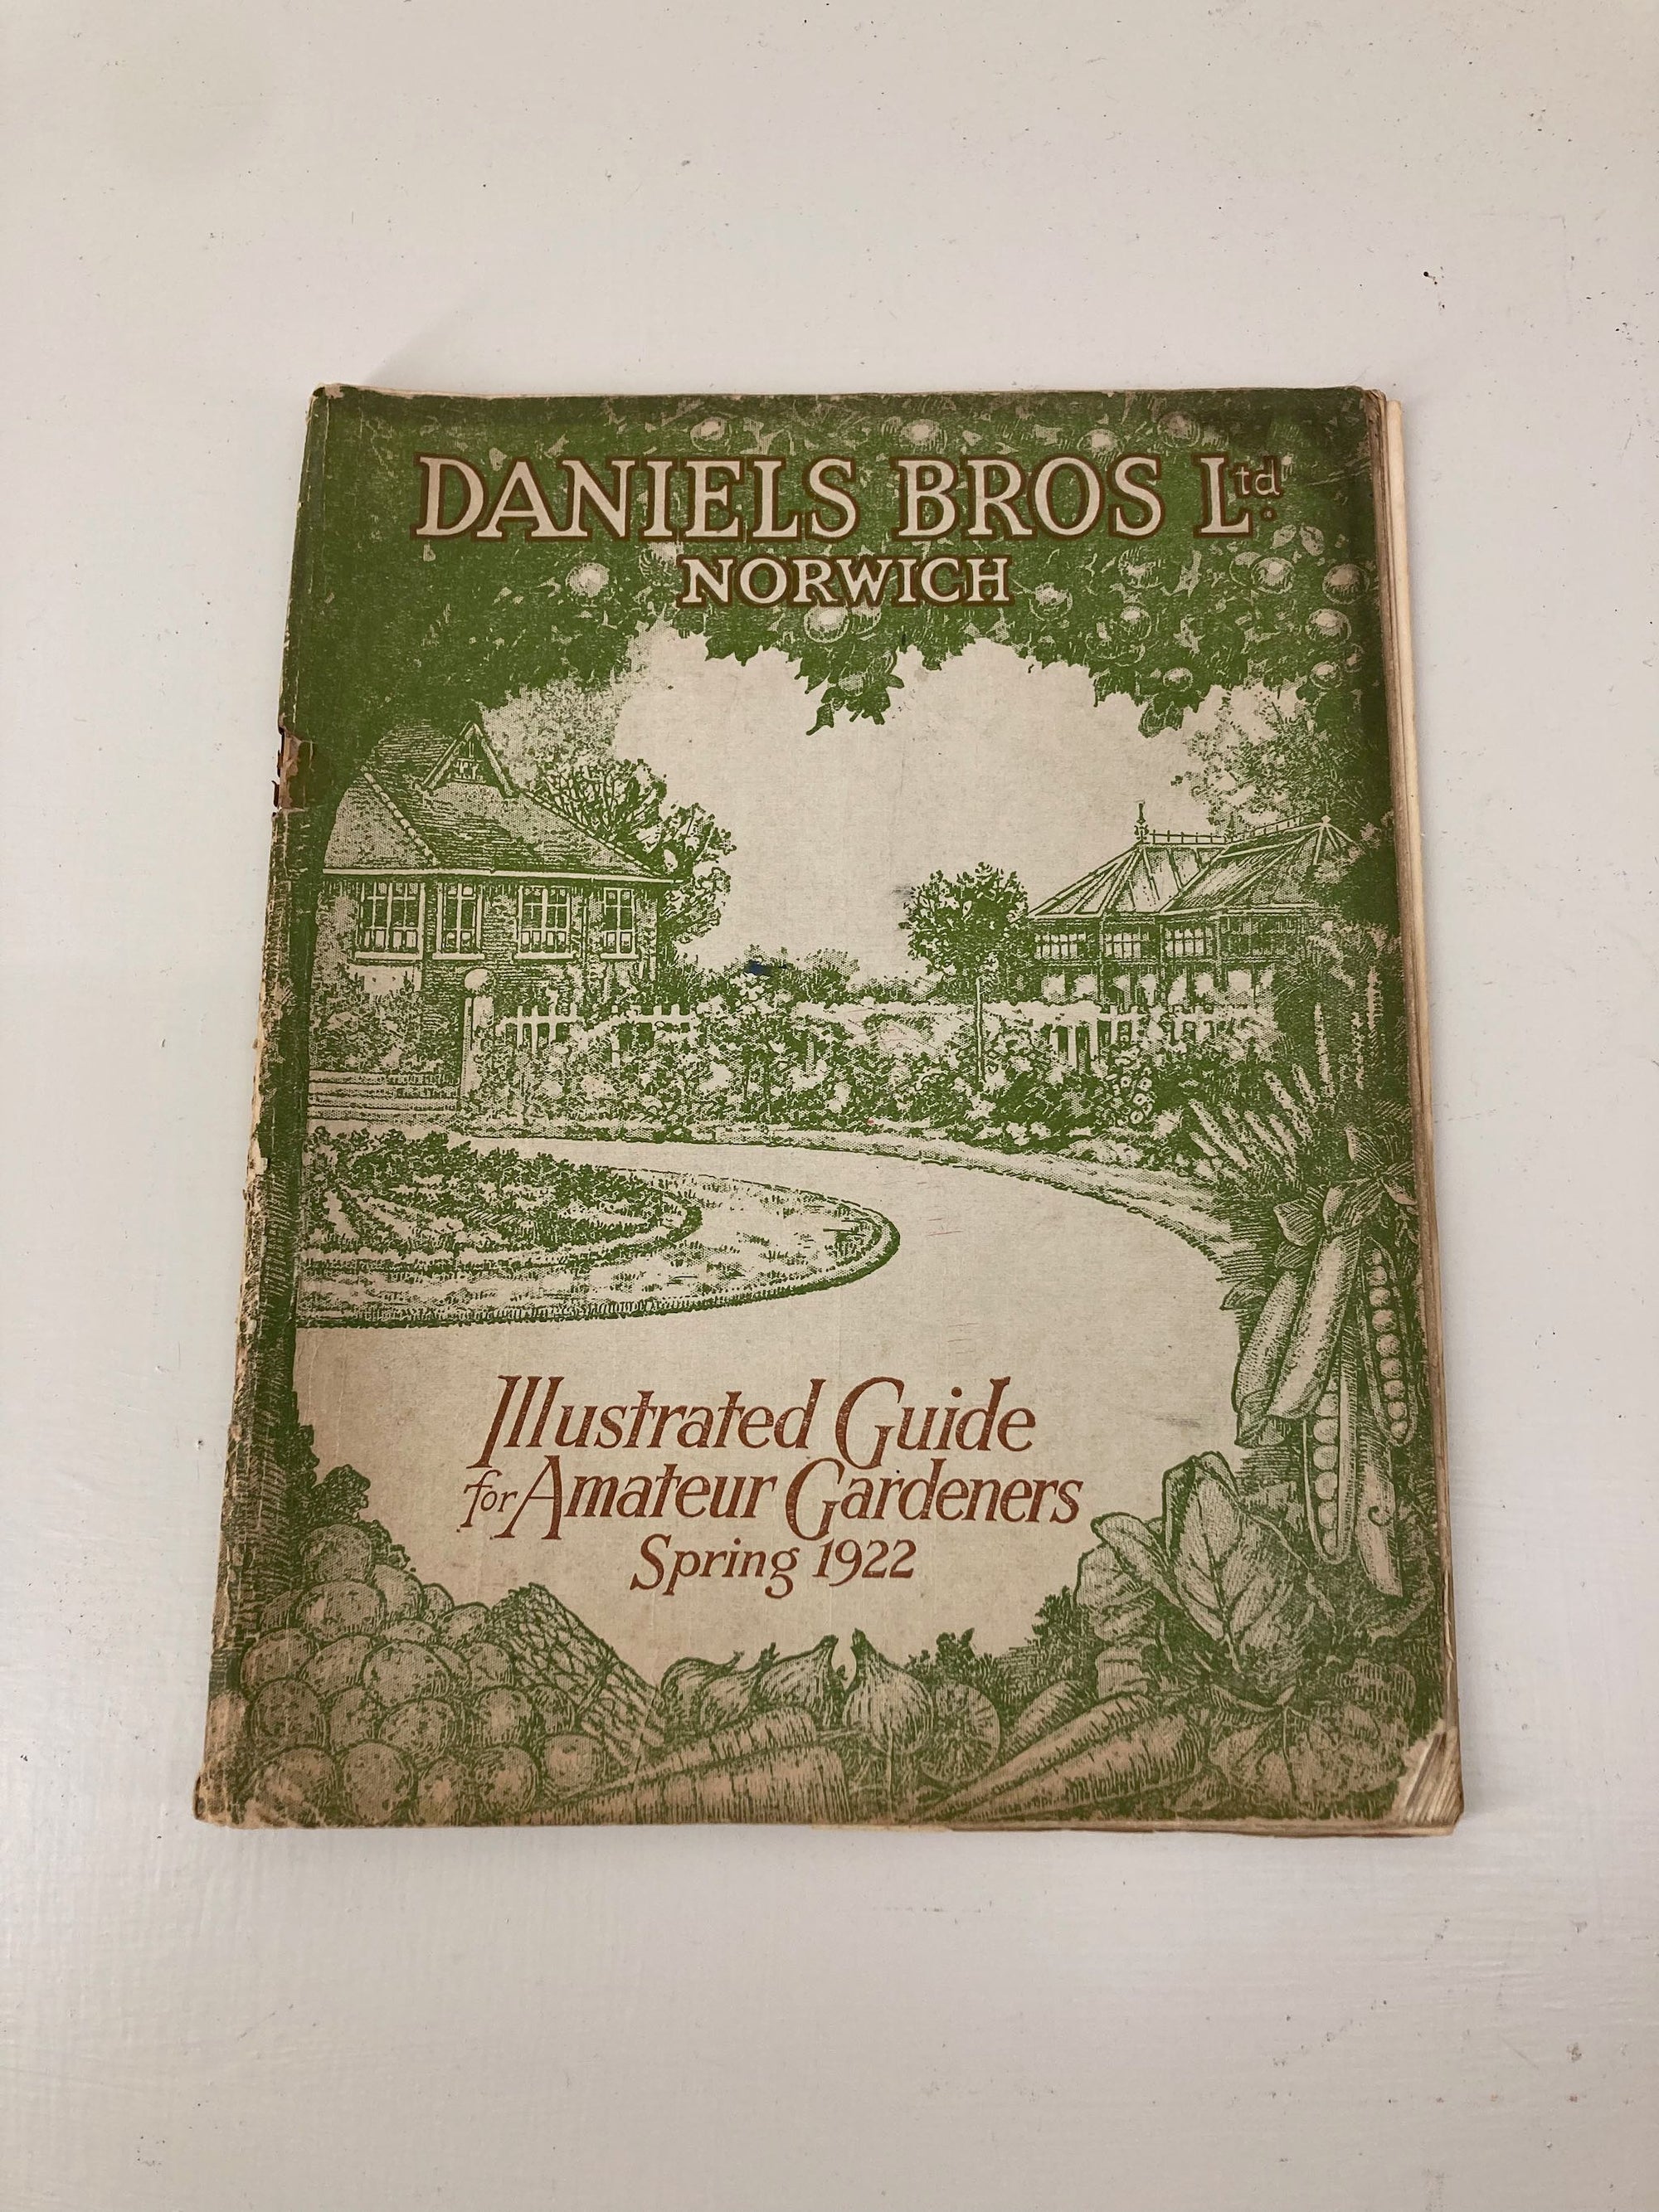 Daniel Bros Seed Catalogue, Spring 1922